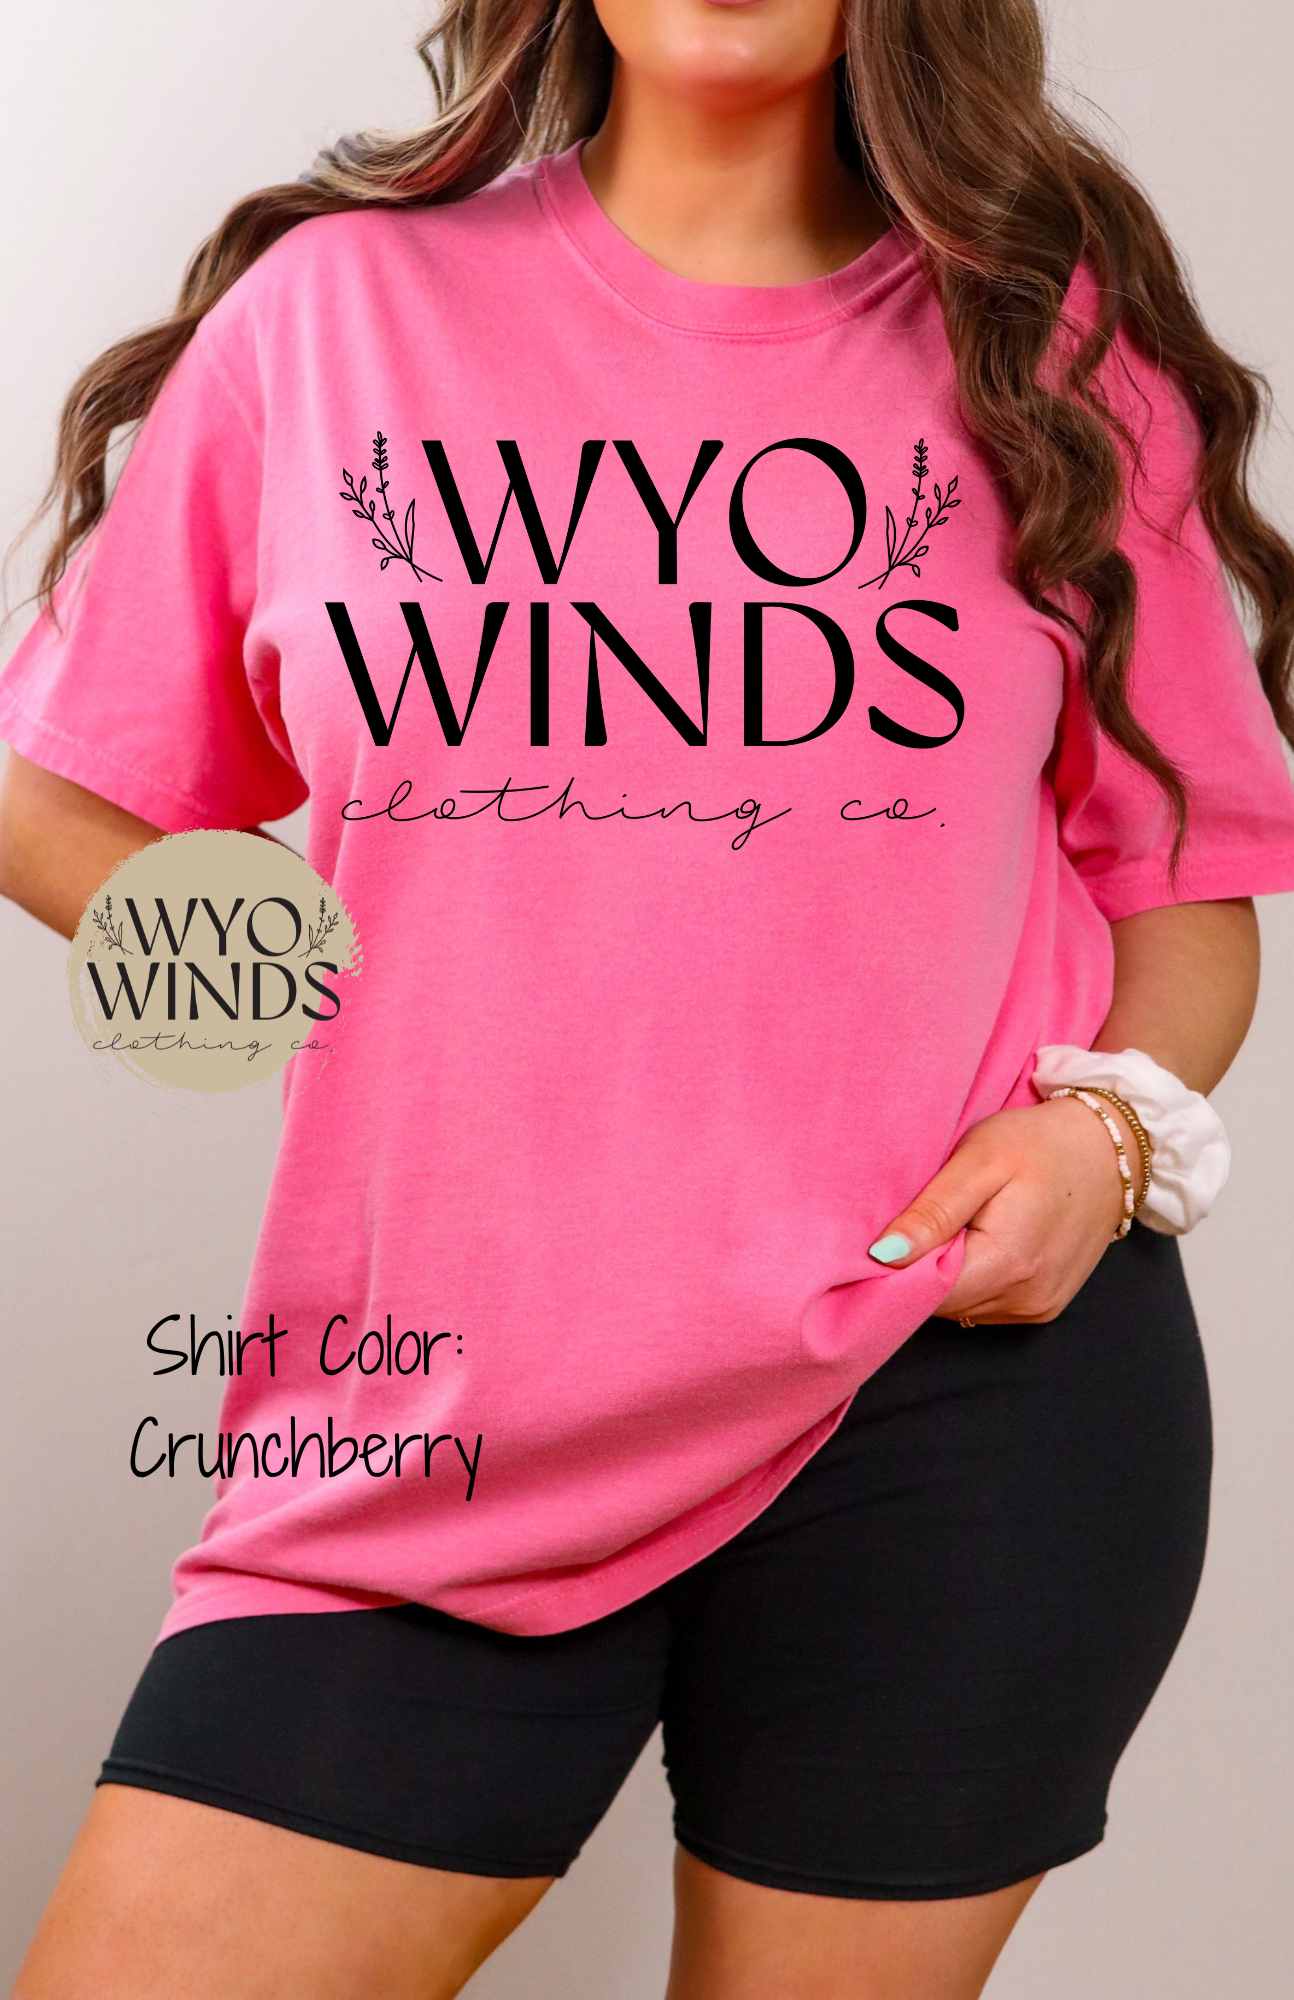 Wyo Winds Clothing Co